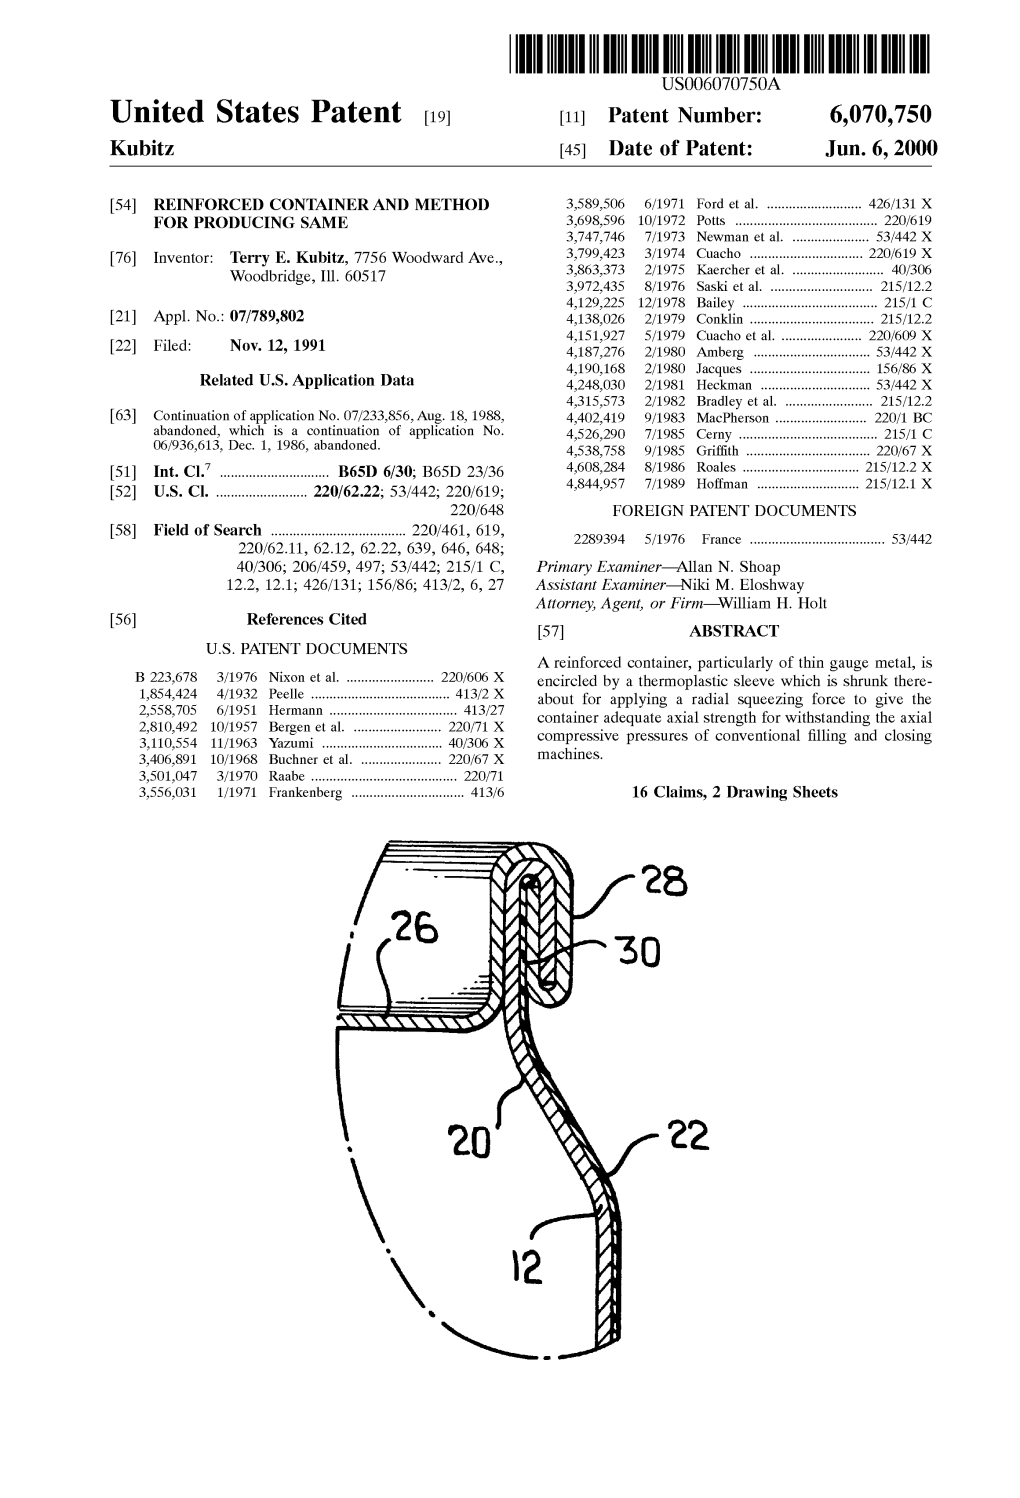 United States Patent (19) 11 Patent Number: 6,070,750 Kubitz (45) Date of Patent: Jun